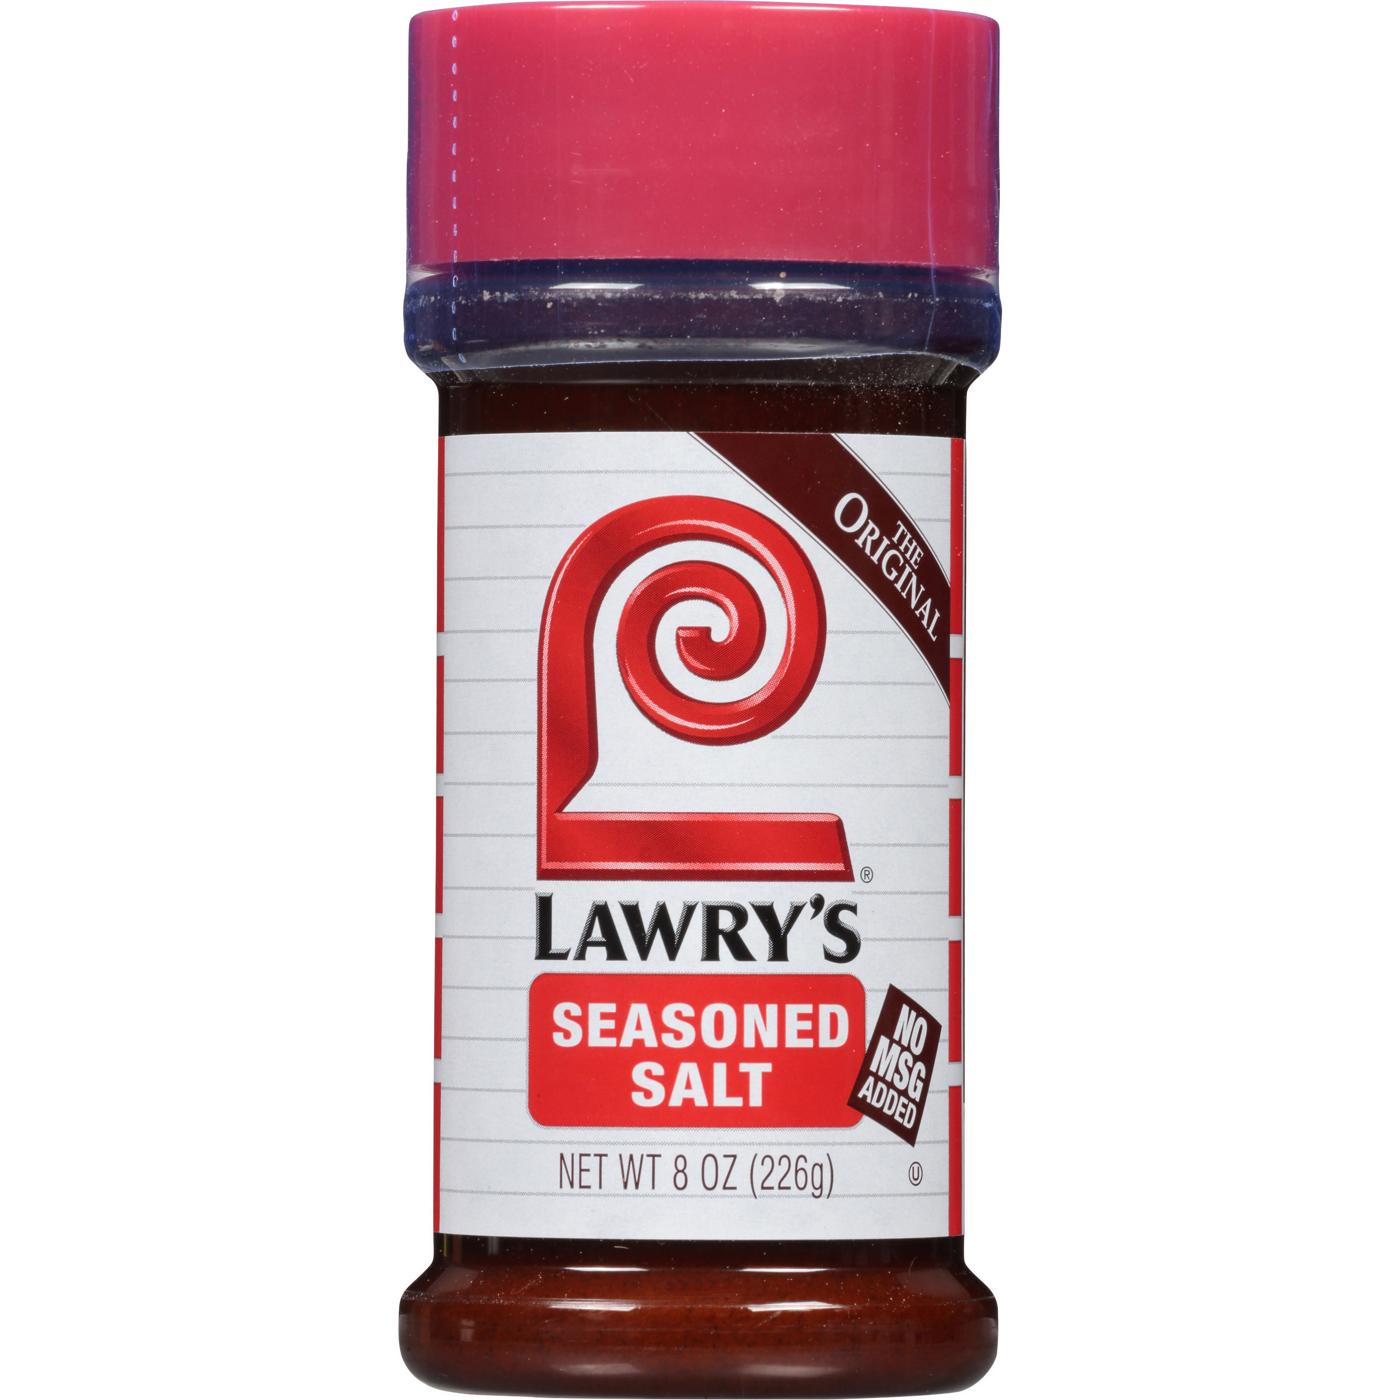 Lawry's Seasoned Salt; image 1 of 5